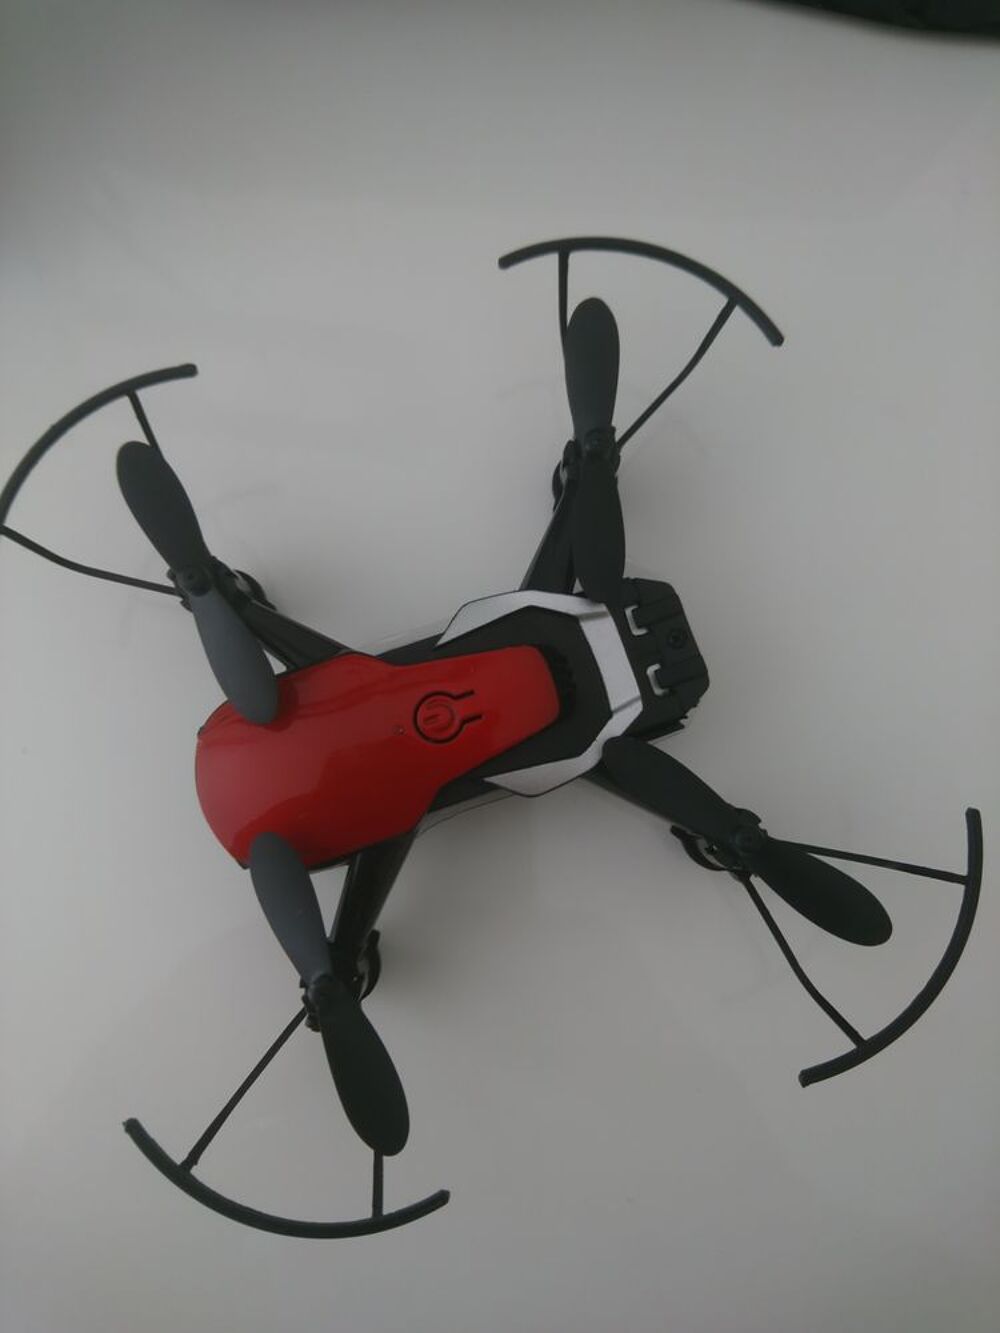  Drone Eachine E61series Mini Jeux / jouets